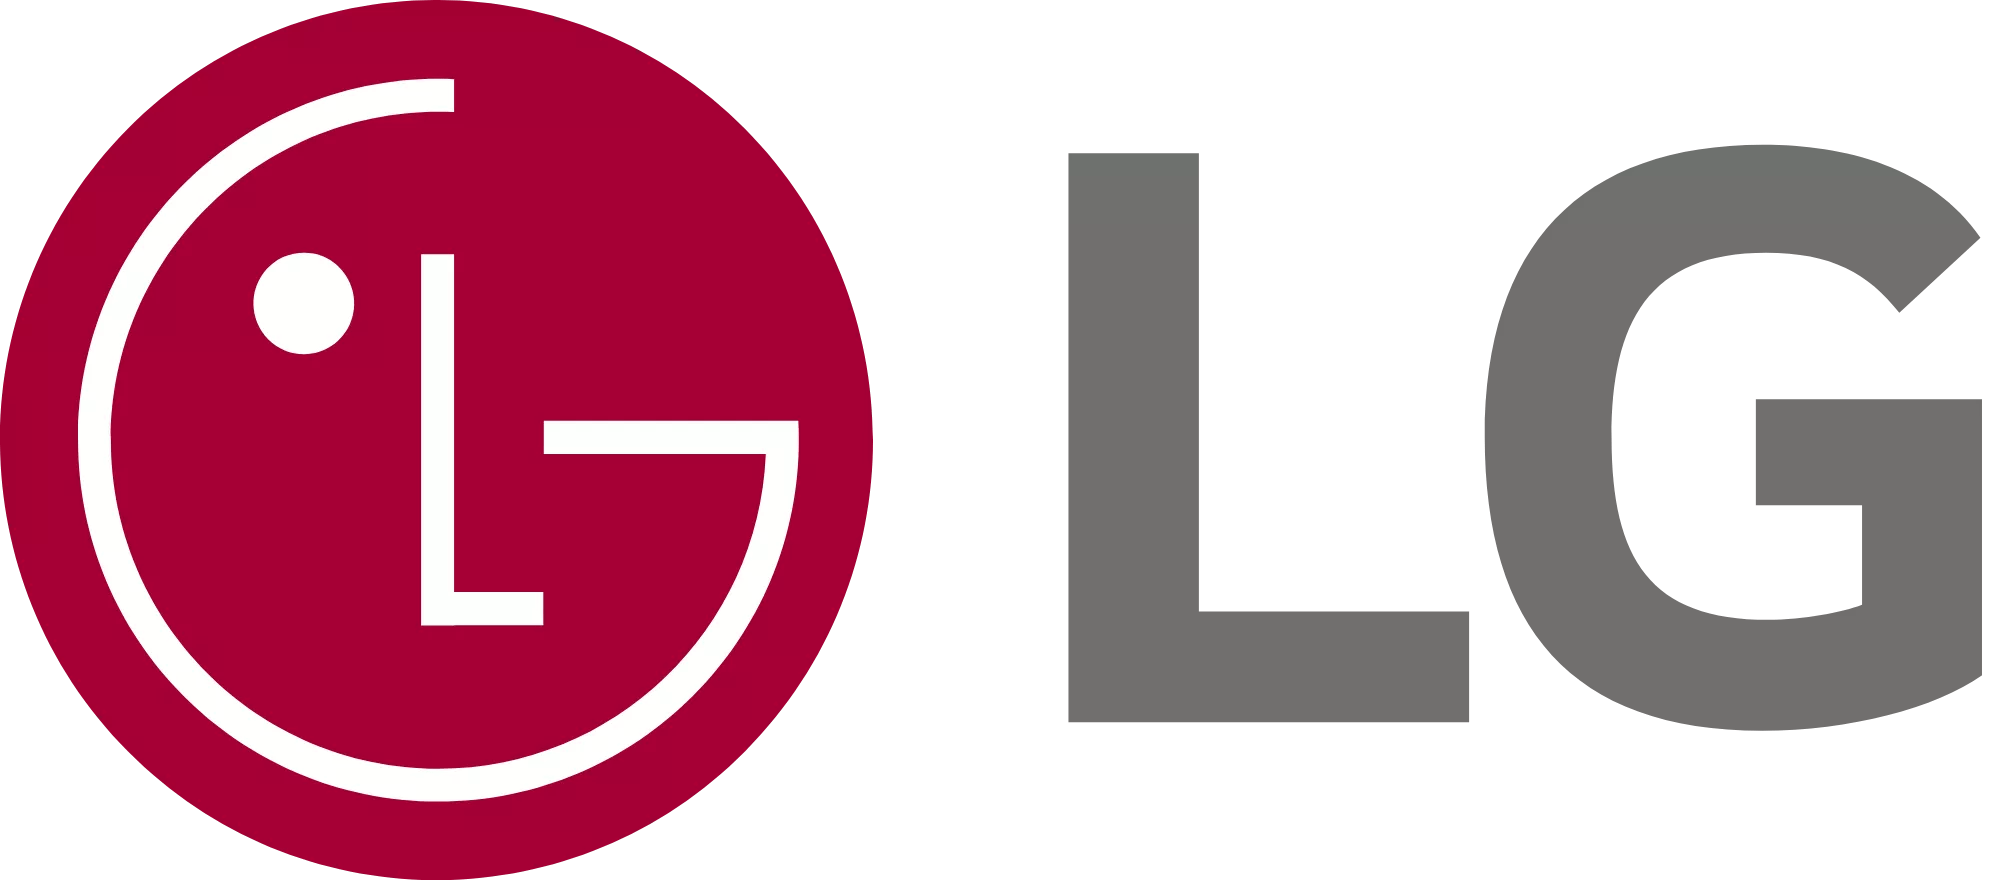 LG logo (Life's Good)